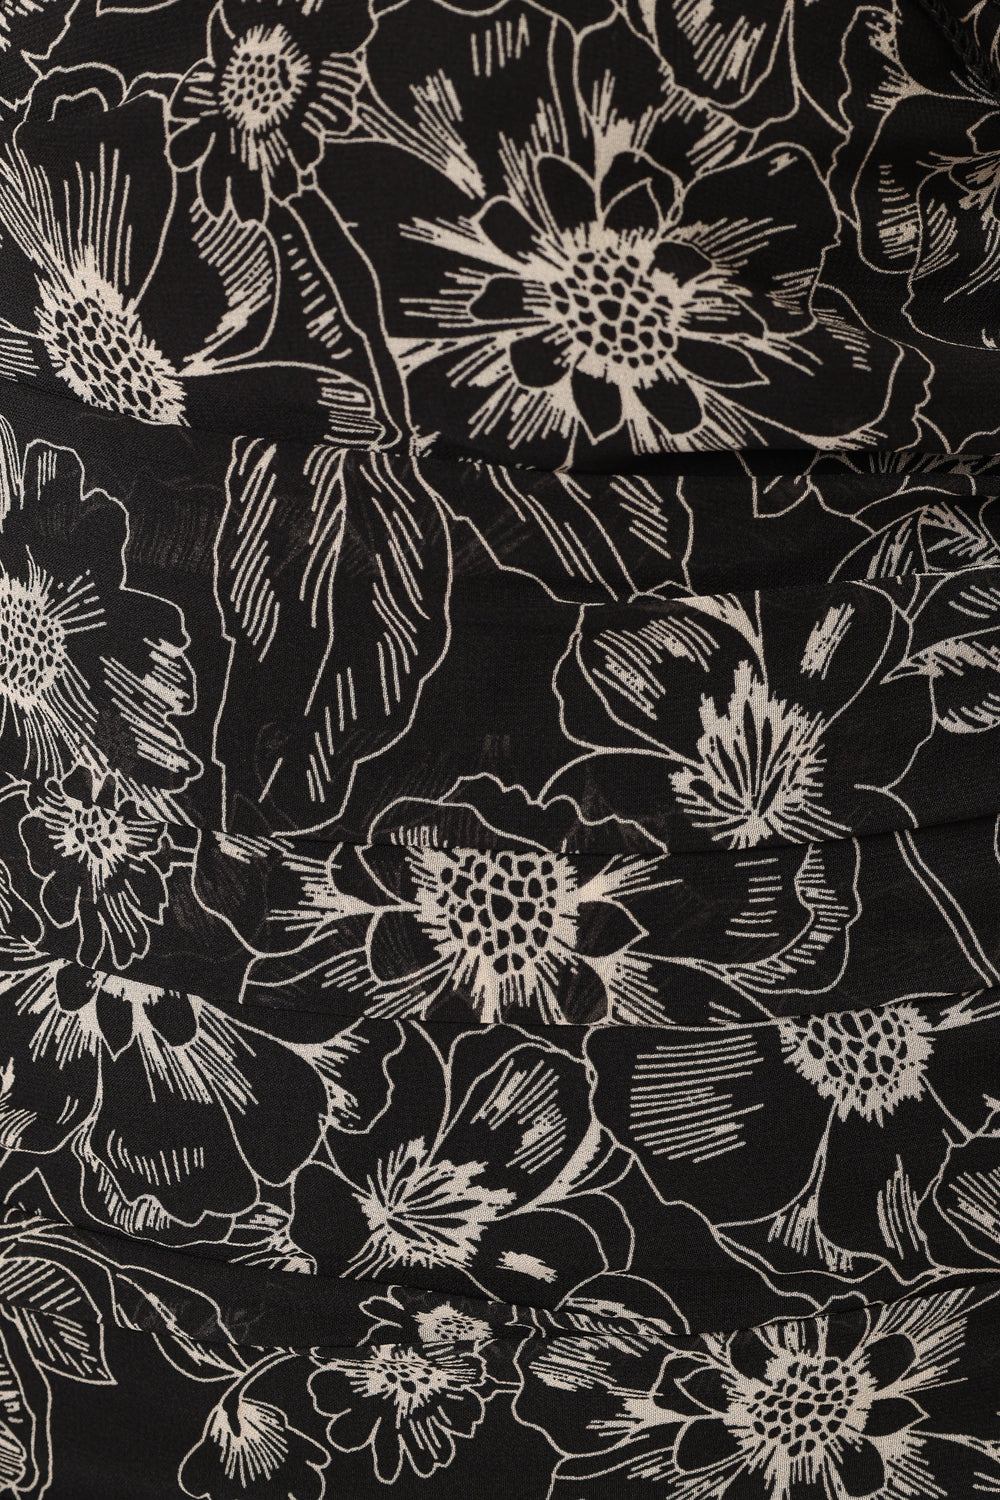 DRESSES @Zuri Rosette Mini Dress - Black Floral (Hold for Modern Romance)